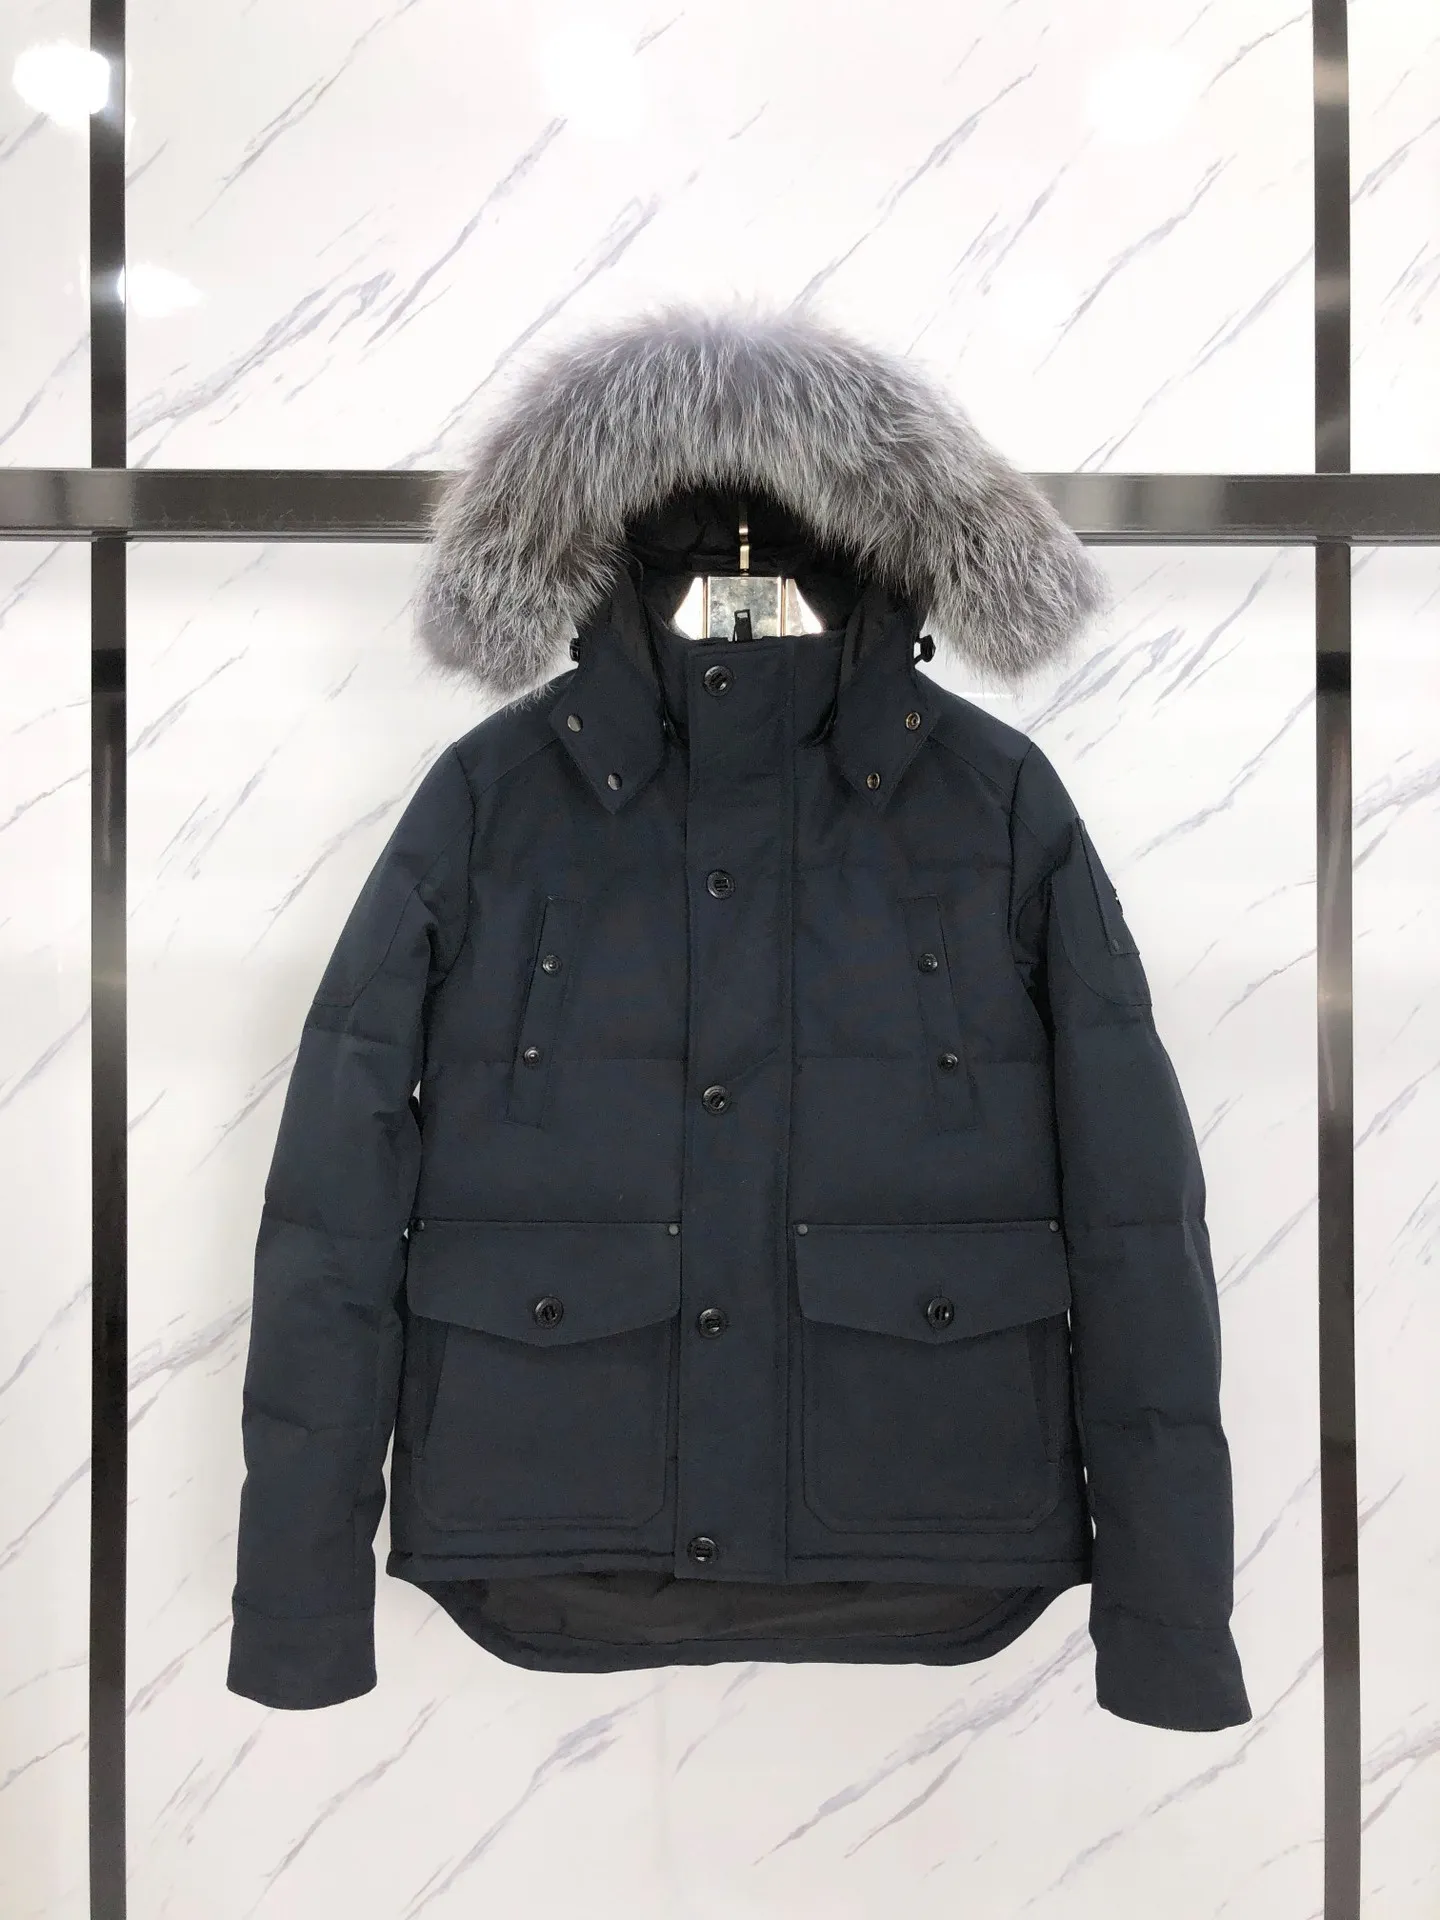 Unisex 겨울 아래로 자켓 윈드 브레이커 두꺼운 따뜻한 두건 패션 망 겨울 코트 고품질 화이트 오리 복어 재킷 TopShop1588